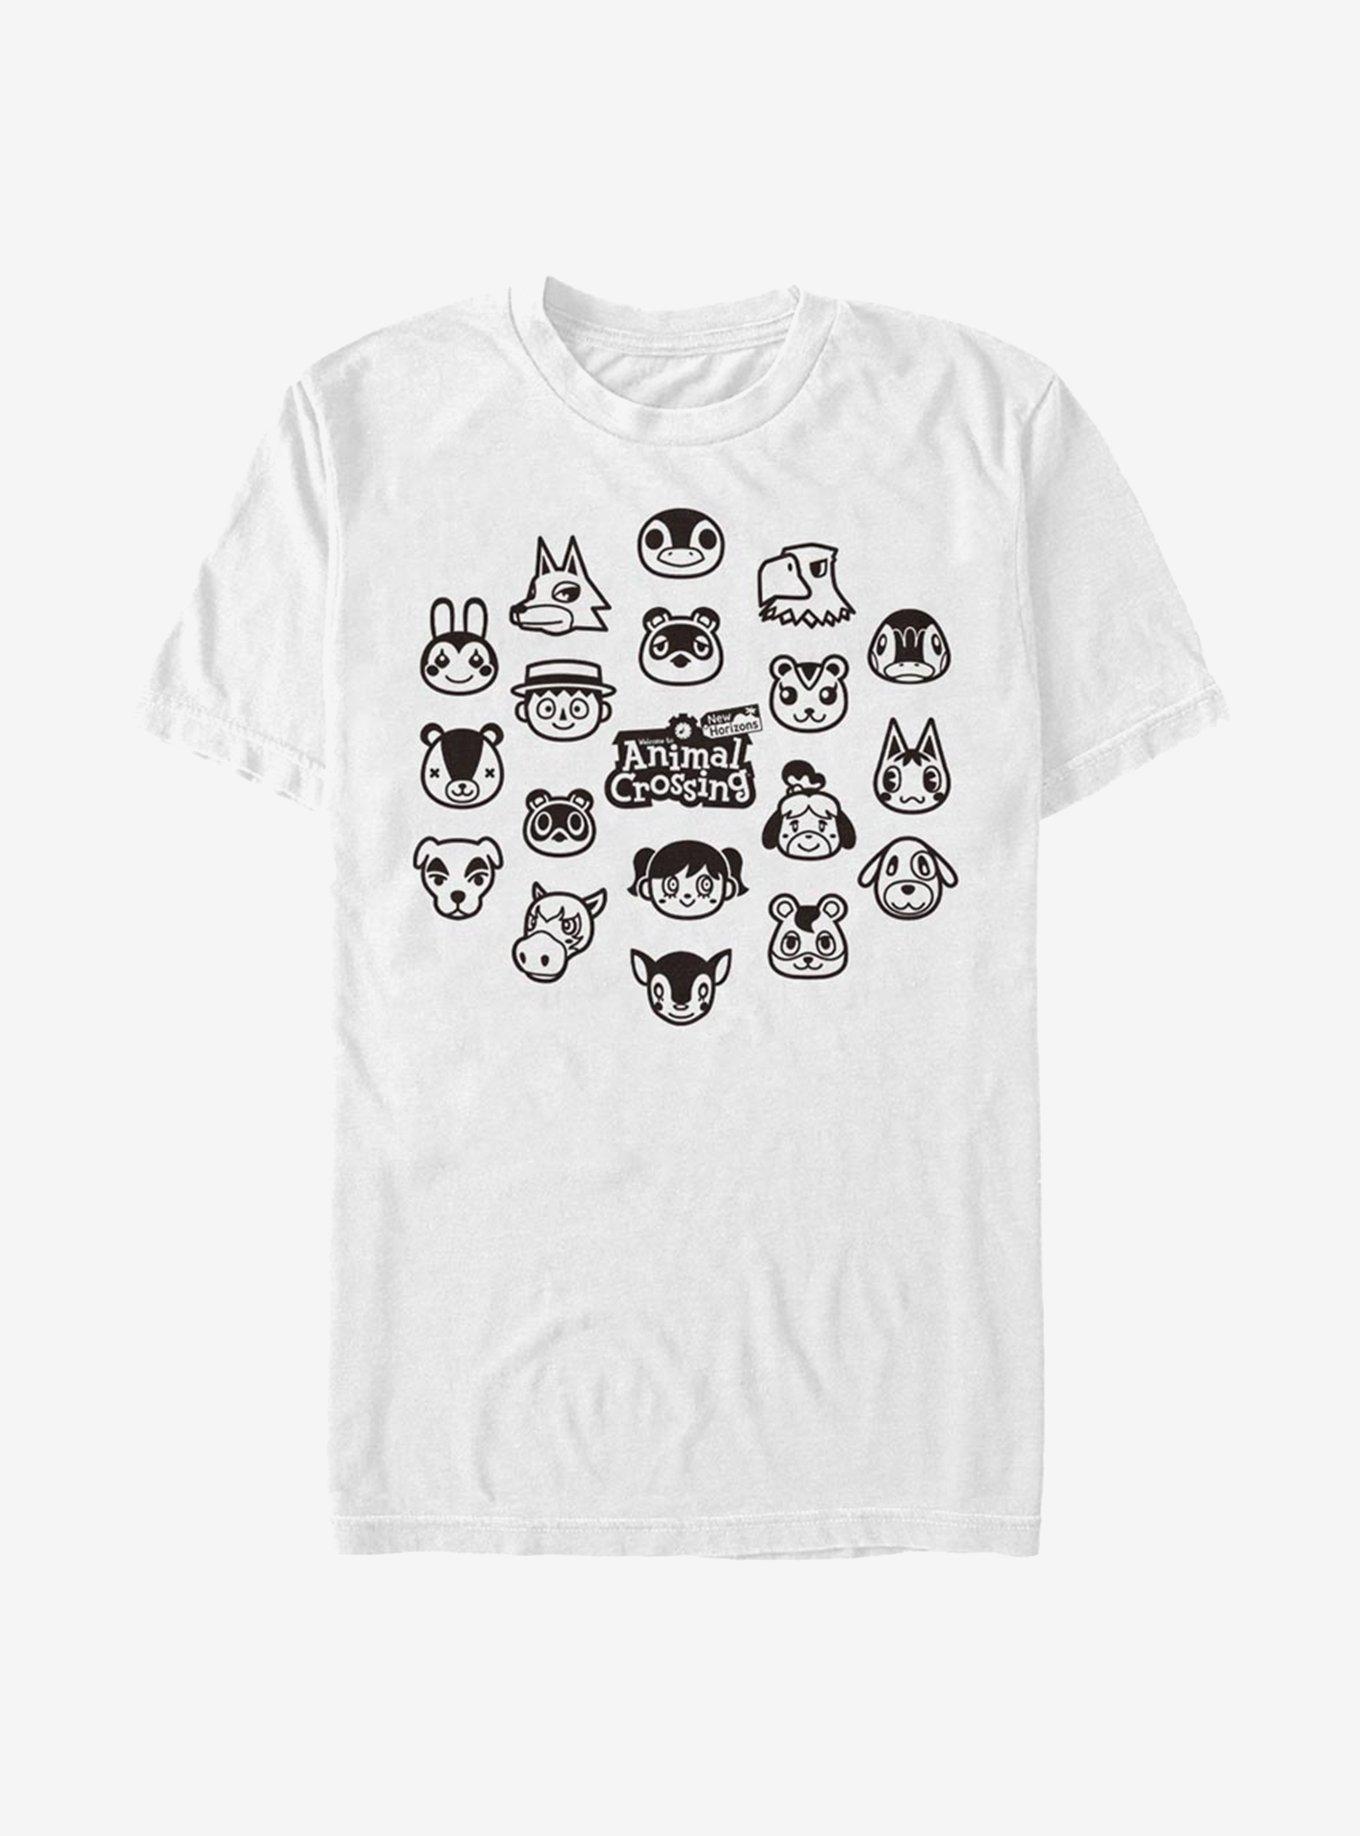 Nintendo Animal Crossing: New Horizons Group T-Shirt, , hi-res